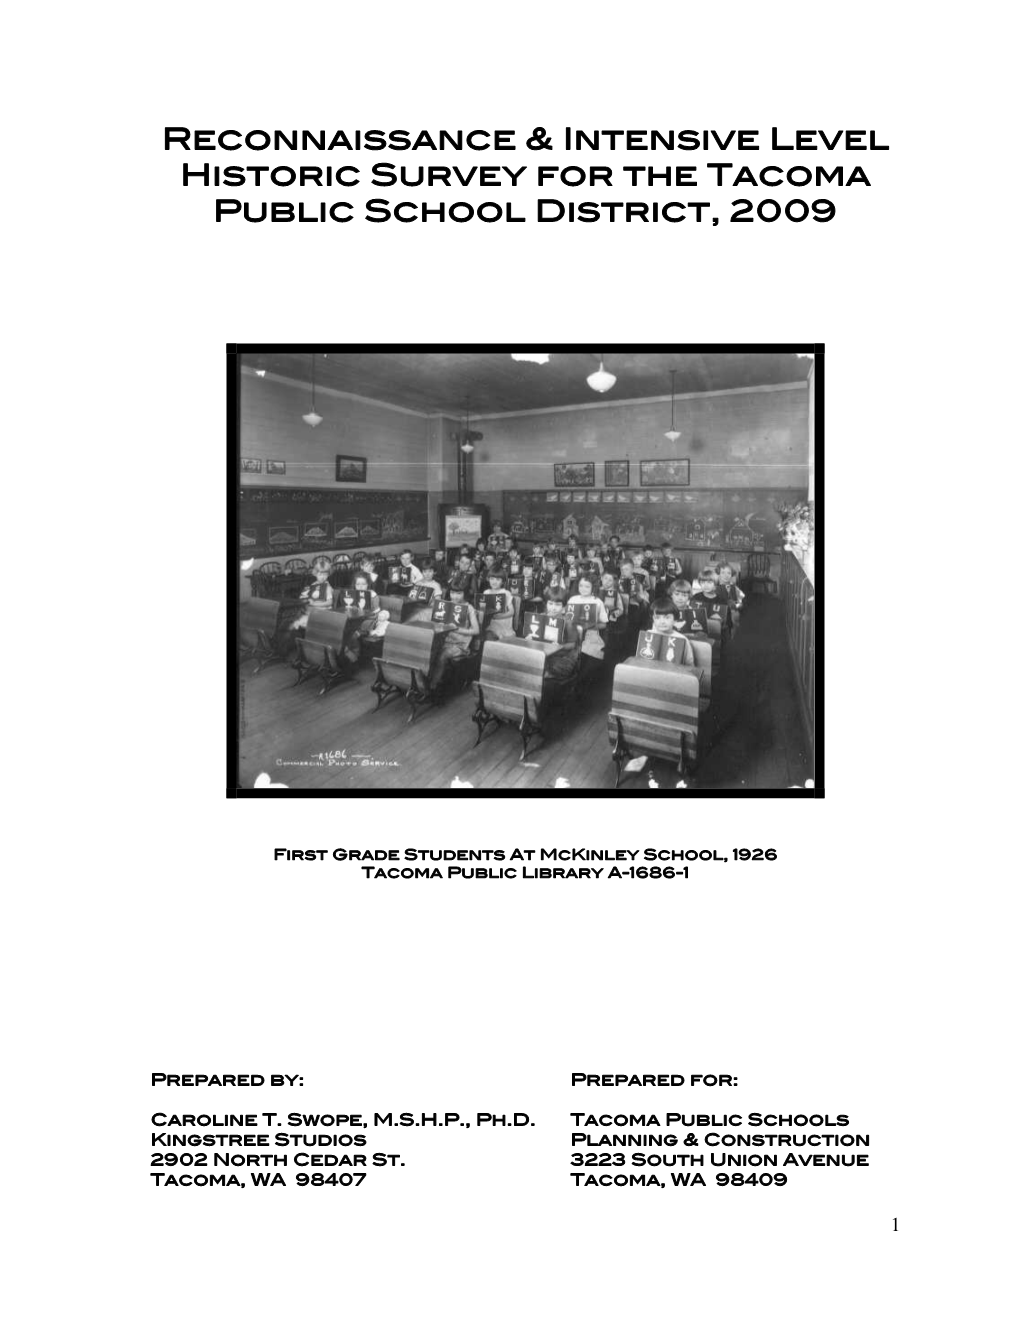 Tacoma Historic School Survey